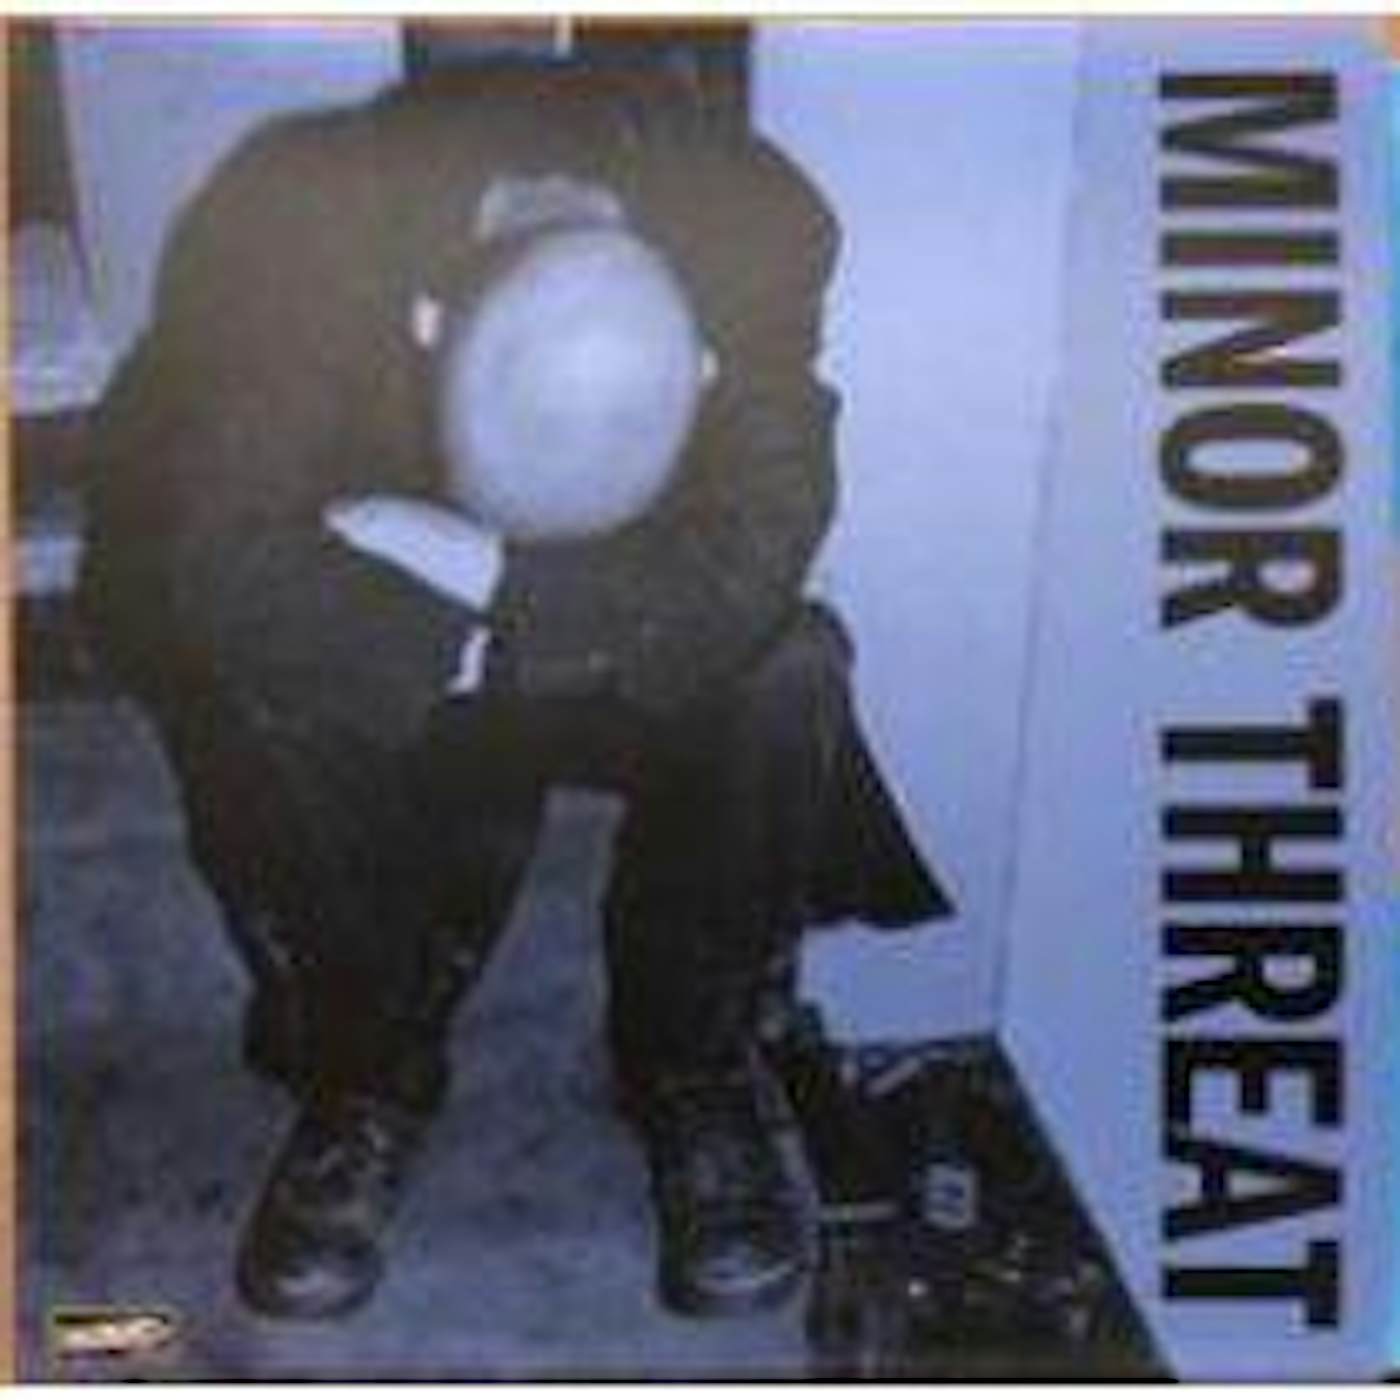 Minor Threat FIRST 2 7"S Vinyl Record